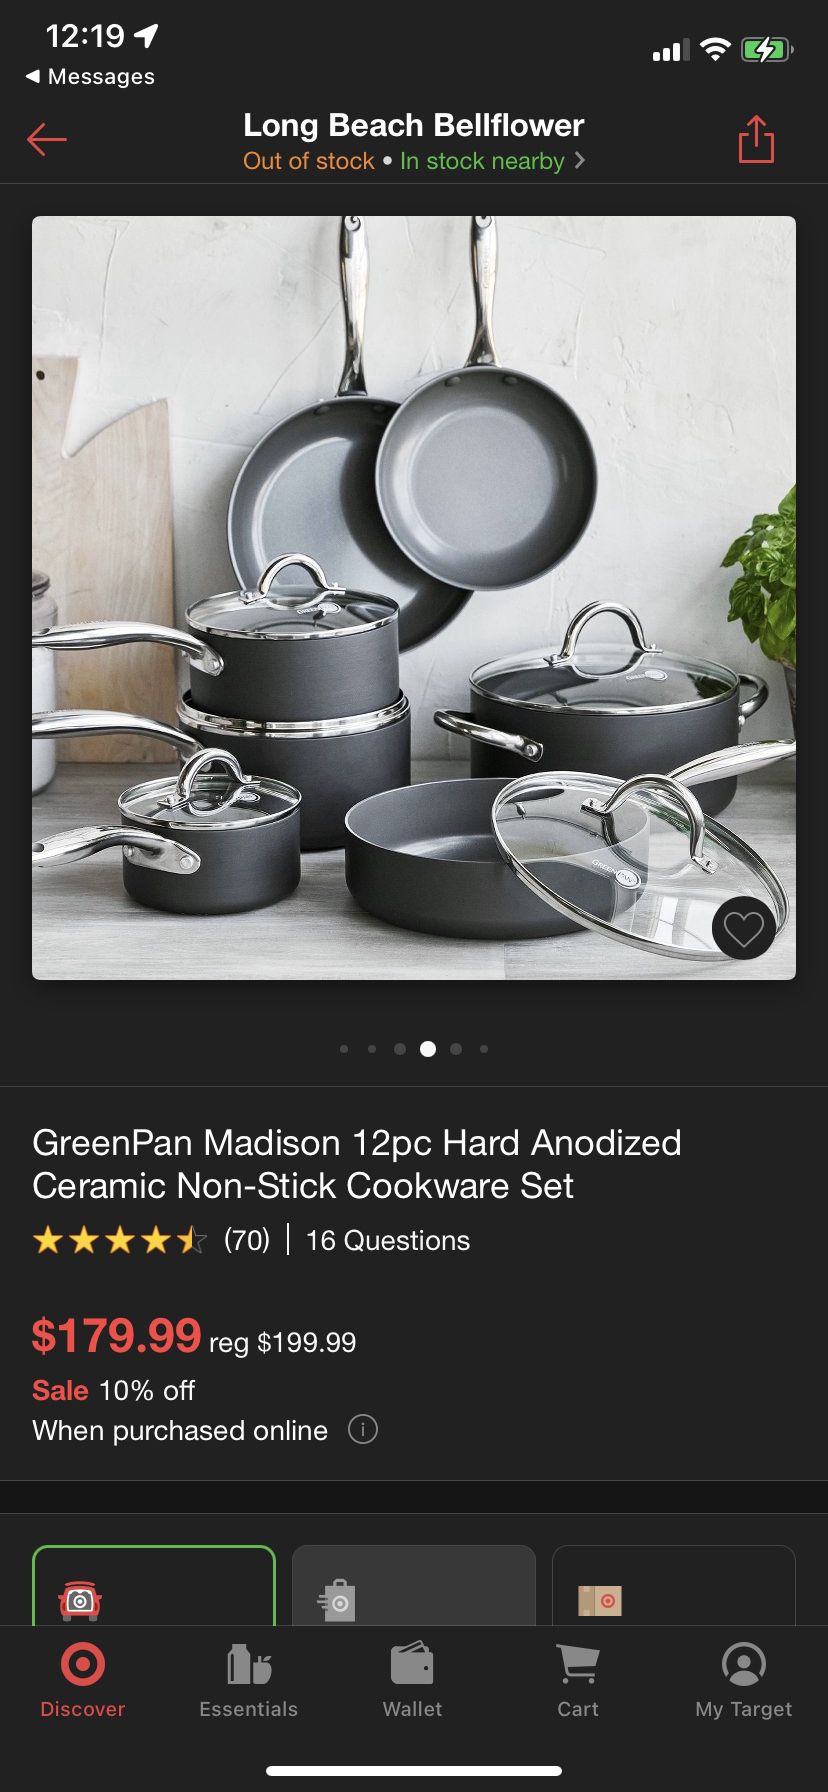 Greenpan Madison 12pc Hard Anodized Ceramic Non-stick Cookware Set